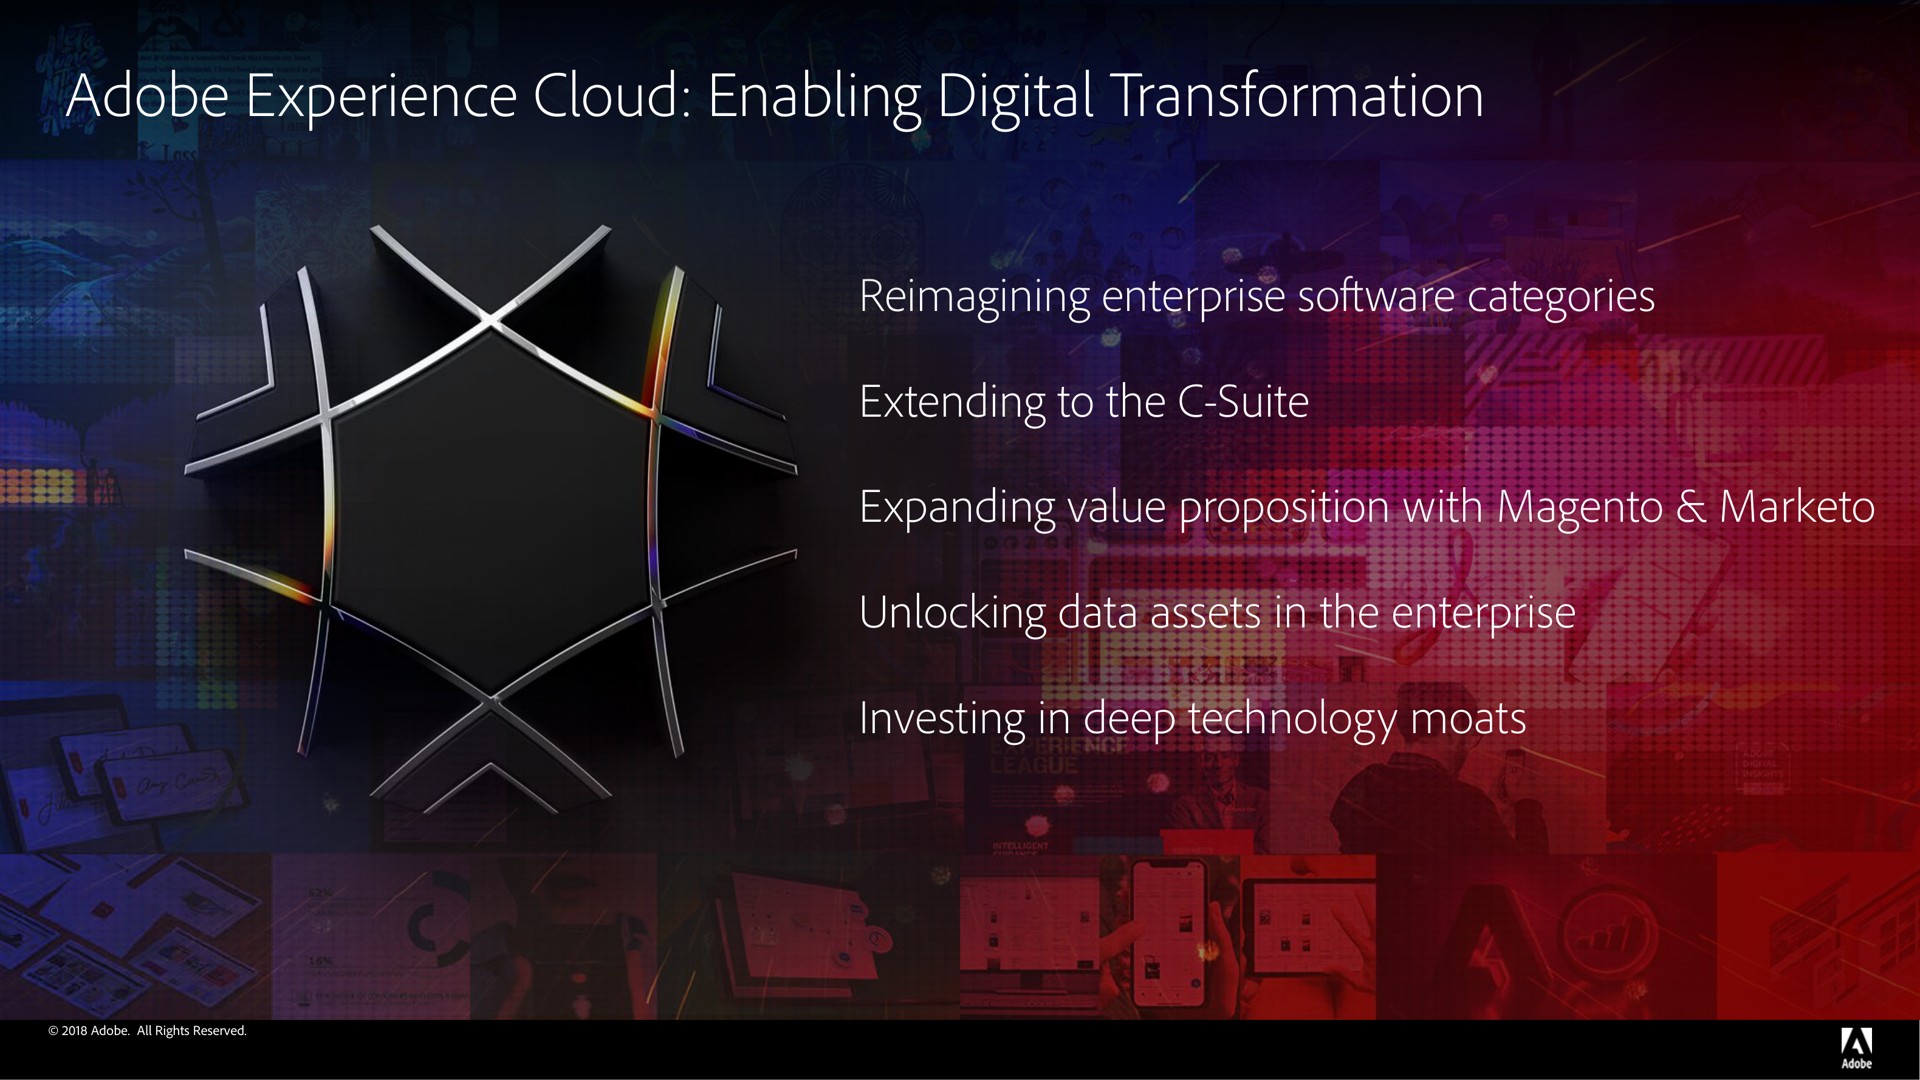 adobe experience cloud enabling digital transformation | Adobe